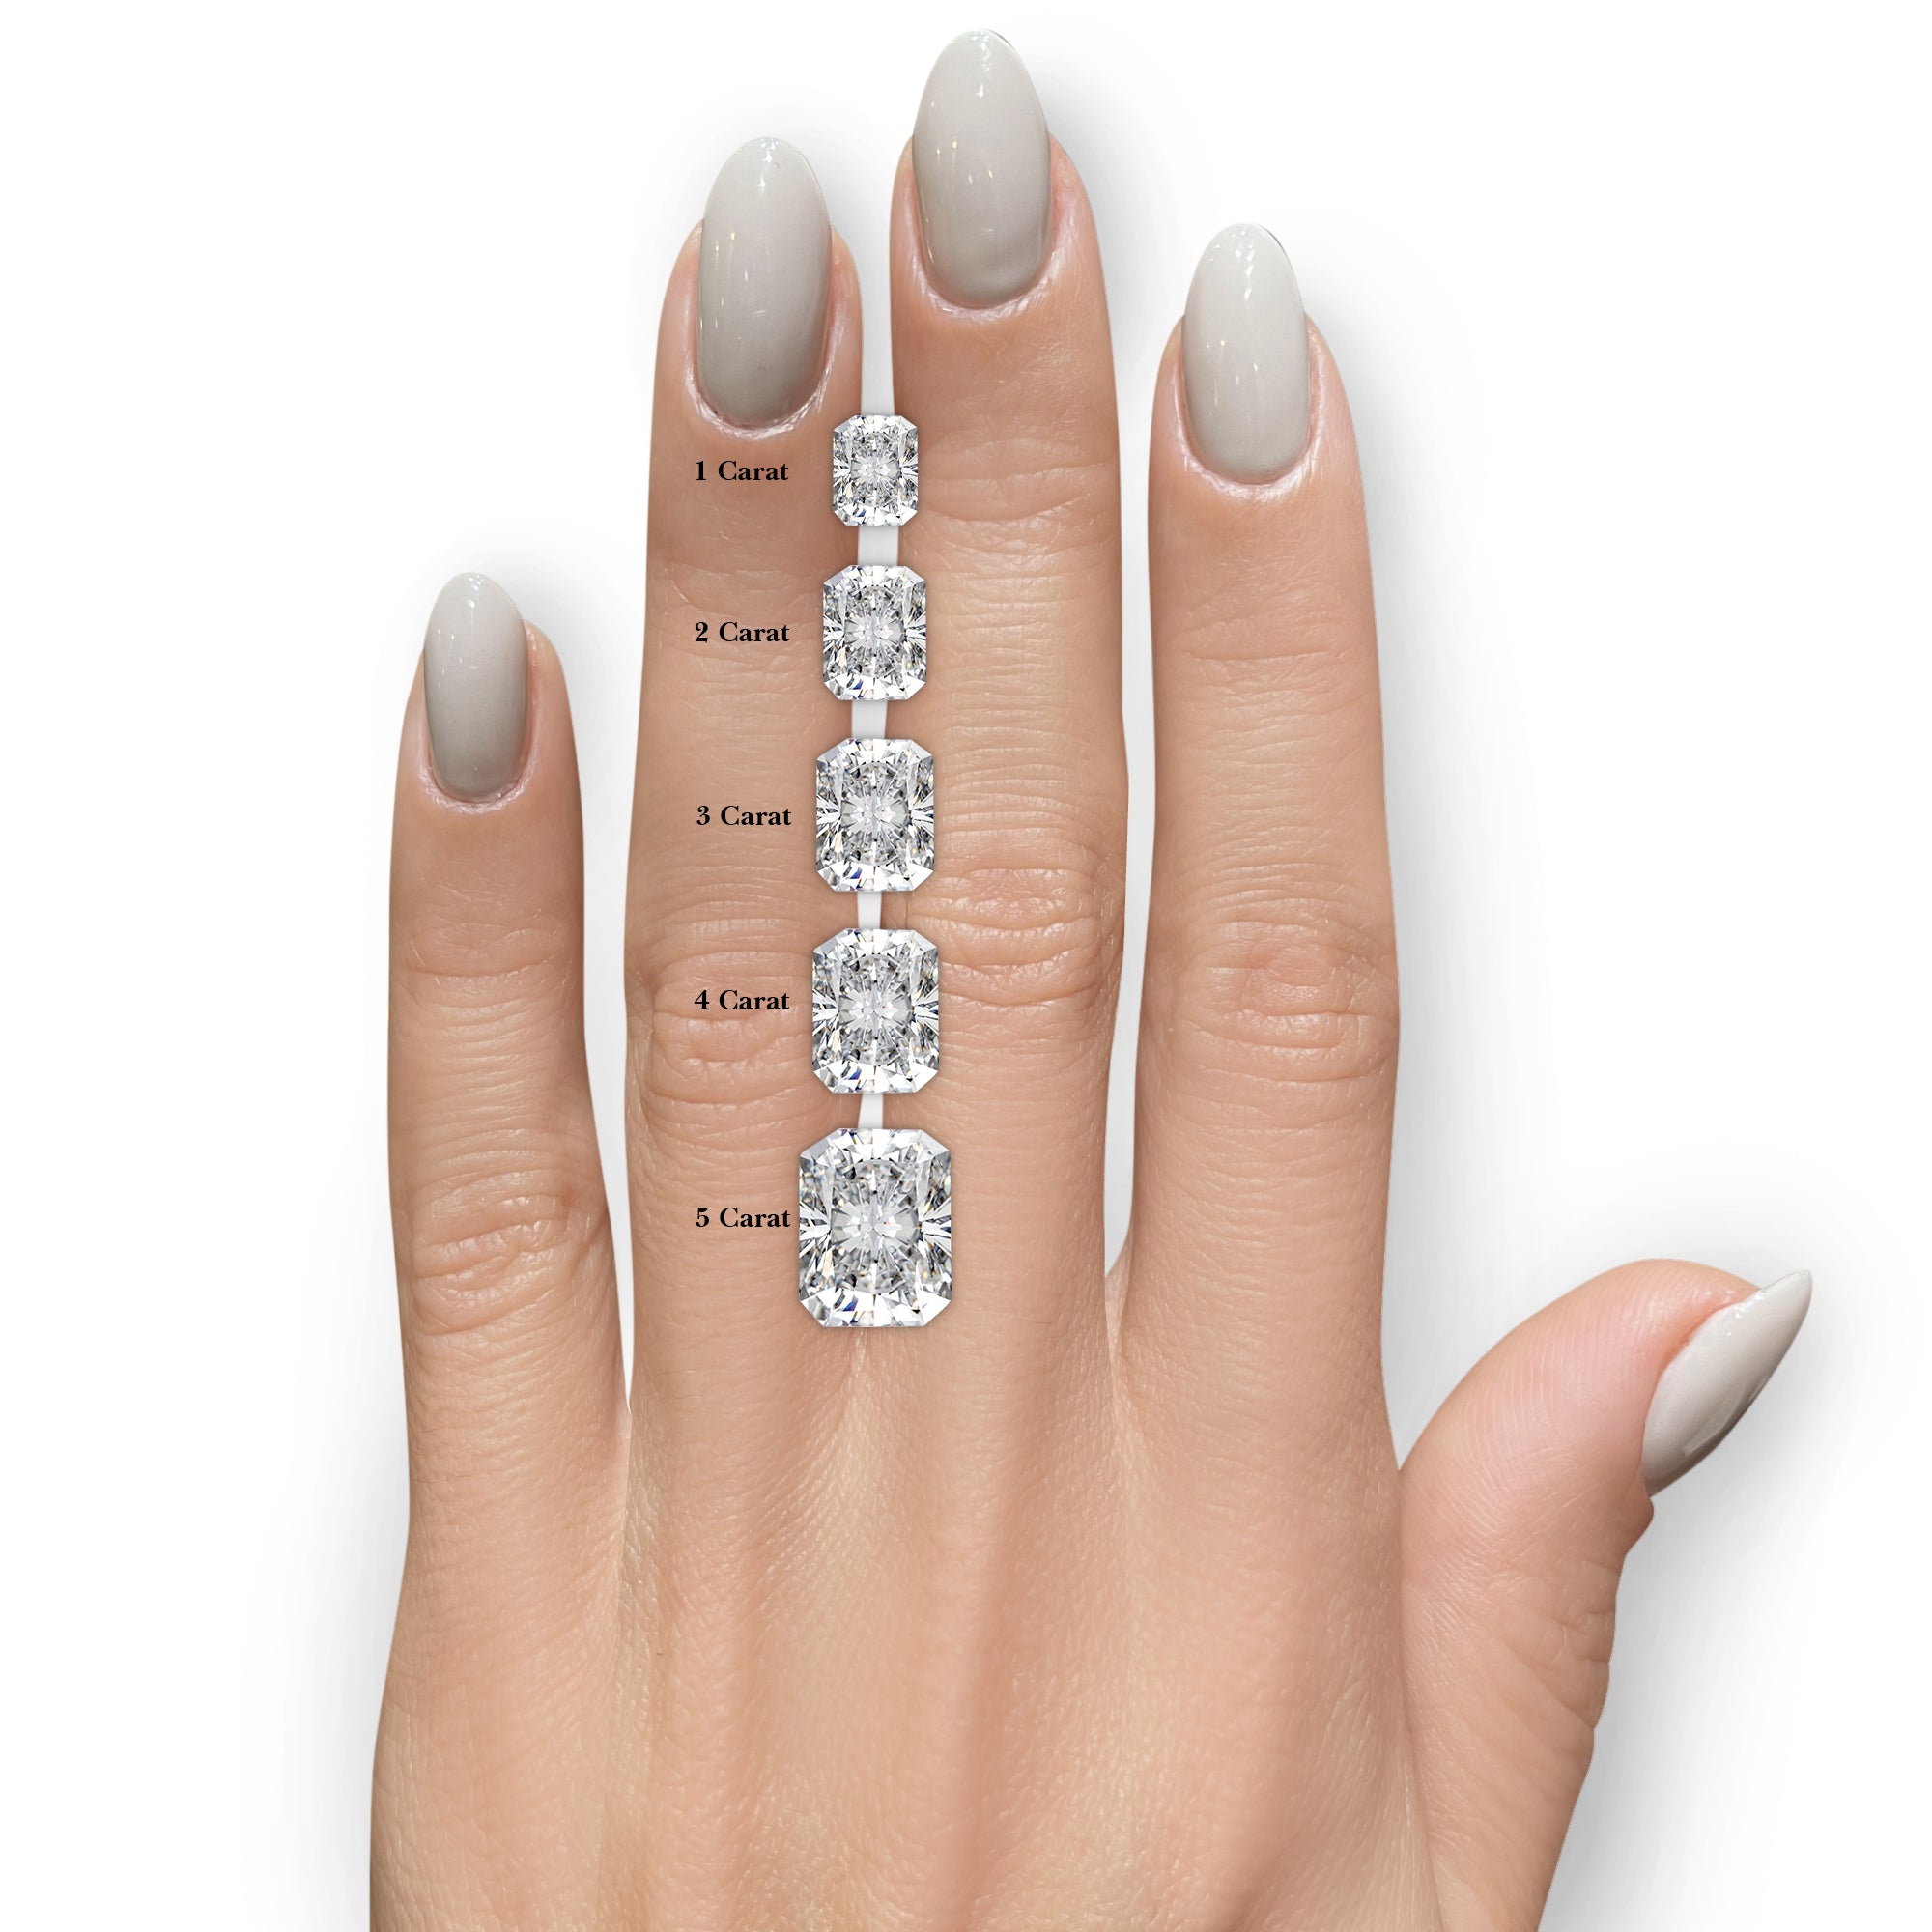 Cher Moissanite & Diamonds Ring -18K Yellow Gold